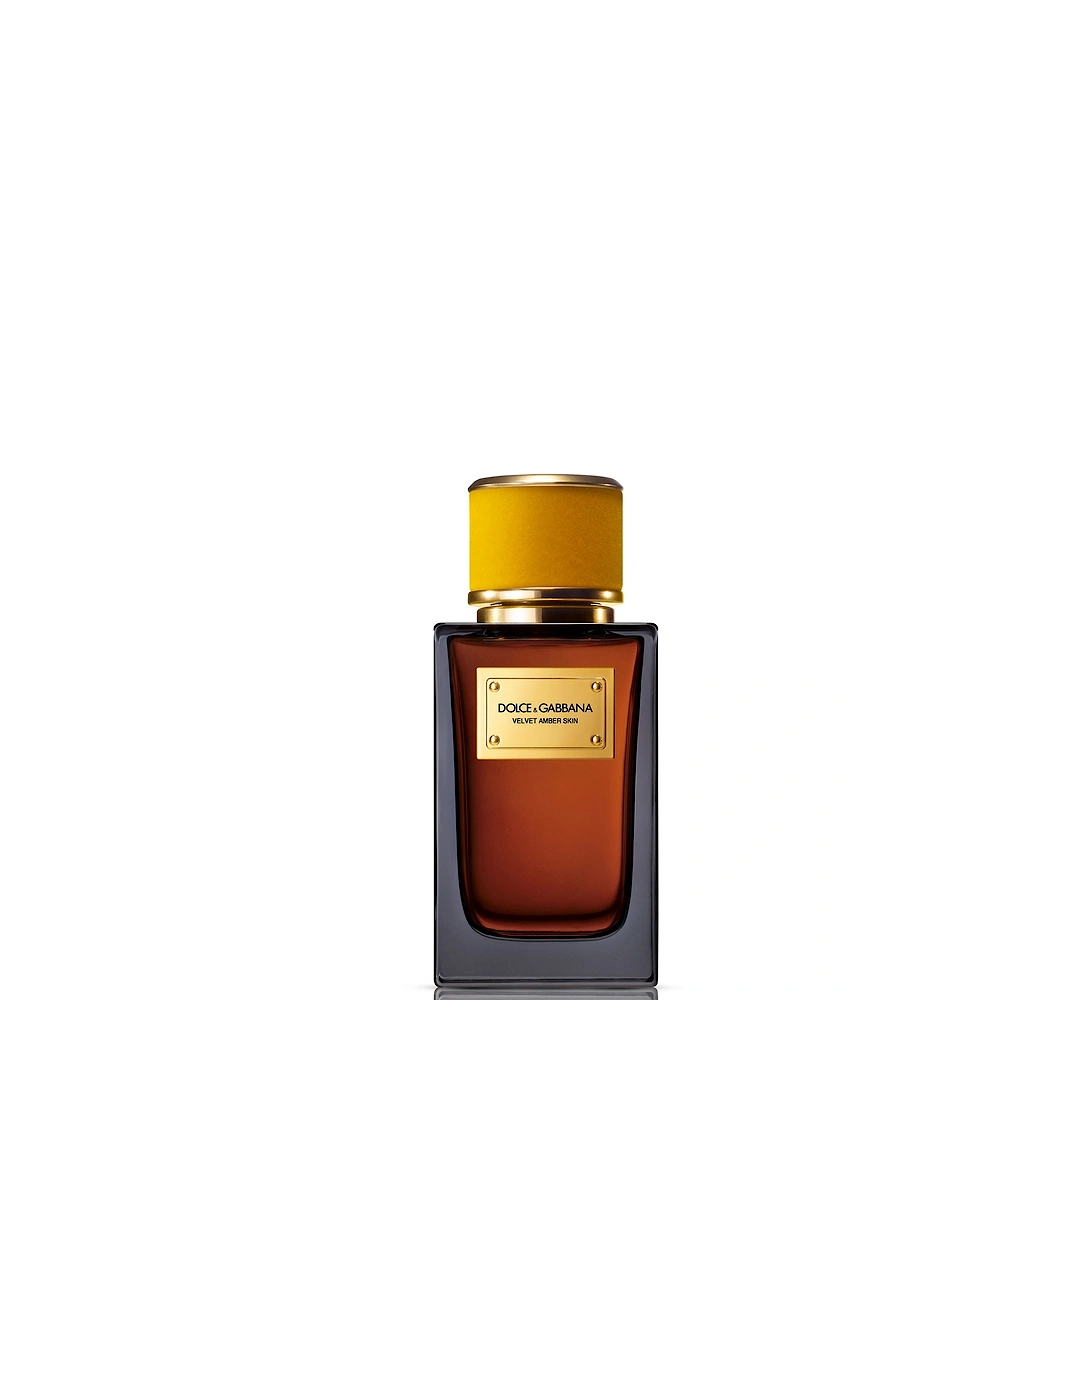 Dolce&Gabbana Velvet Amber Skin Eau de Parfum 100ml, 2 of 1